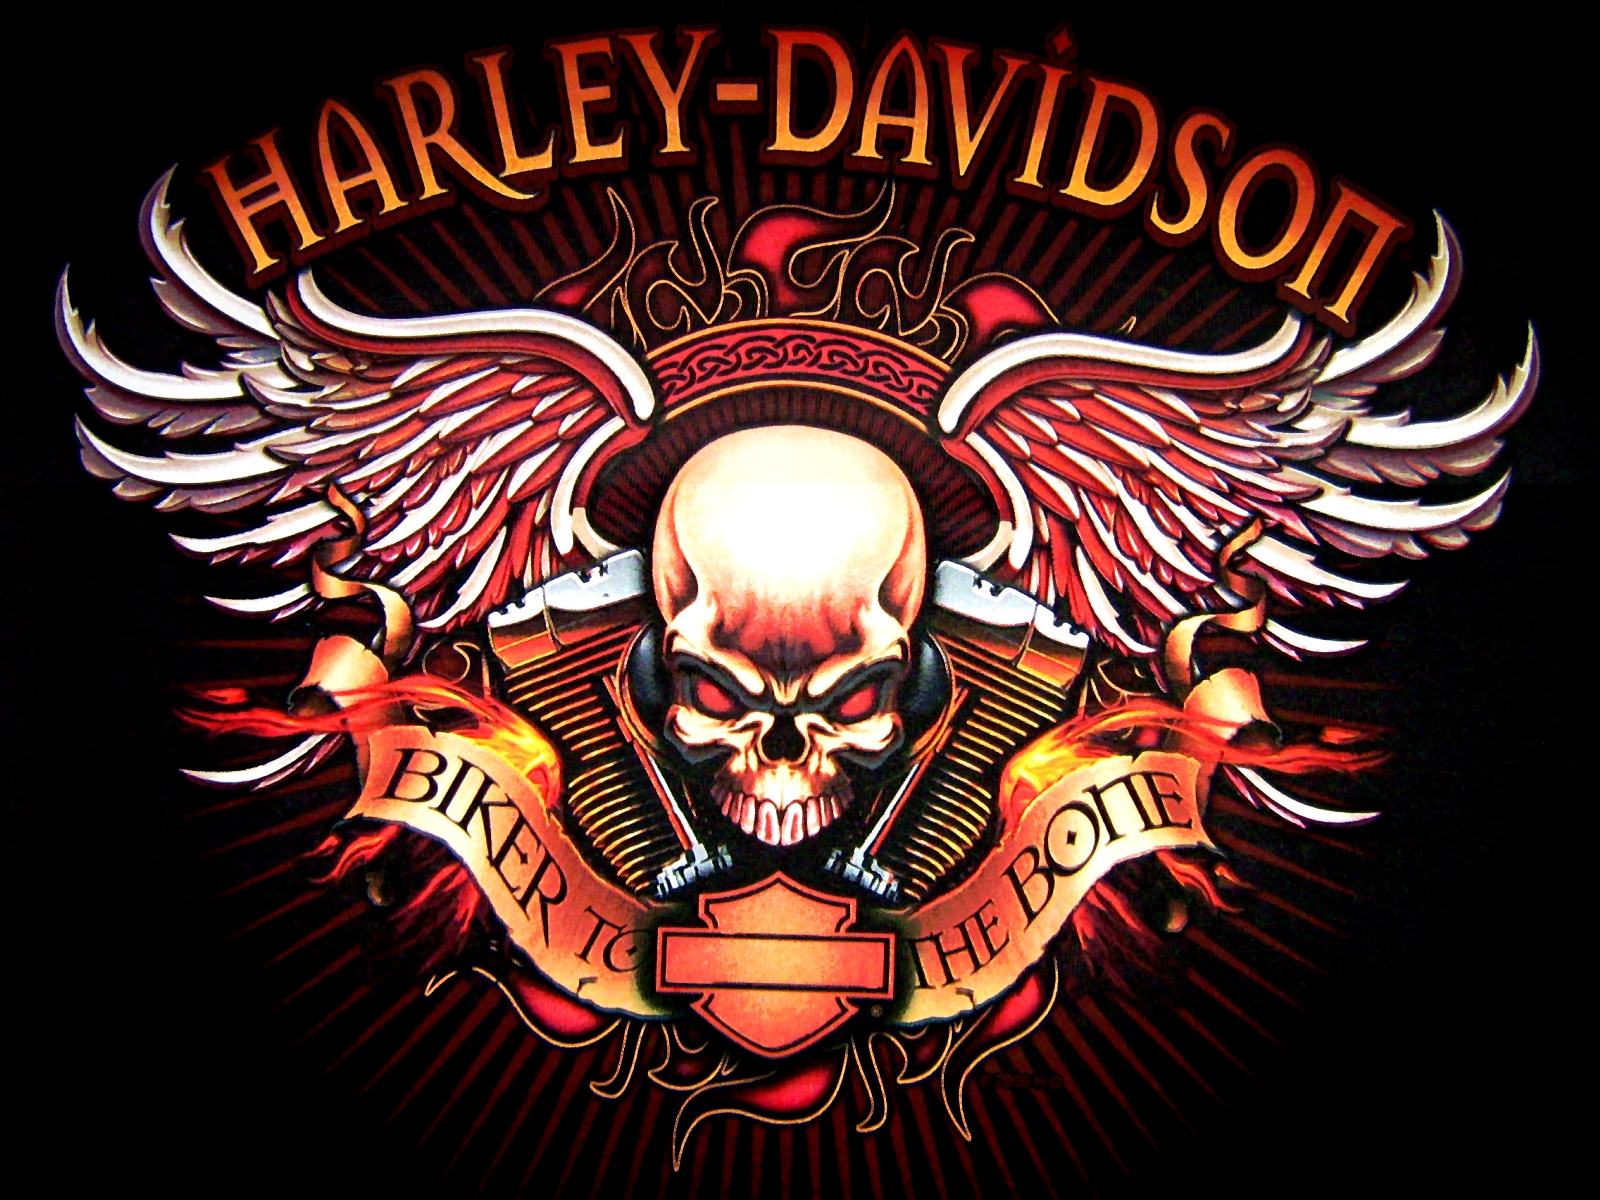 harley davidson, motorcycles, logo, vehicles